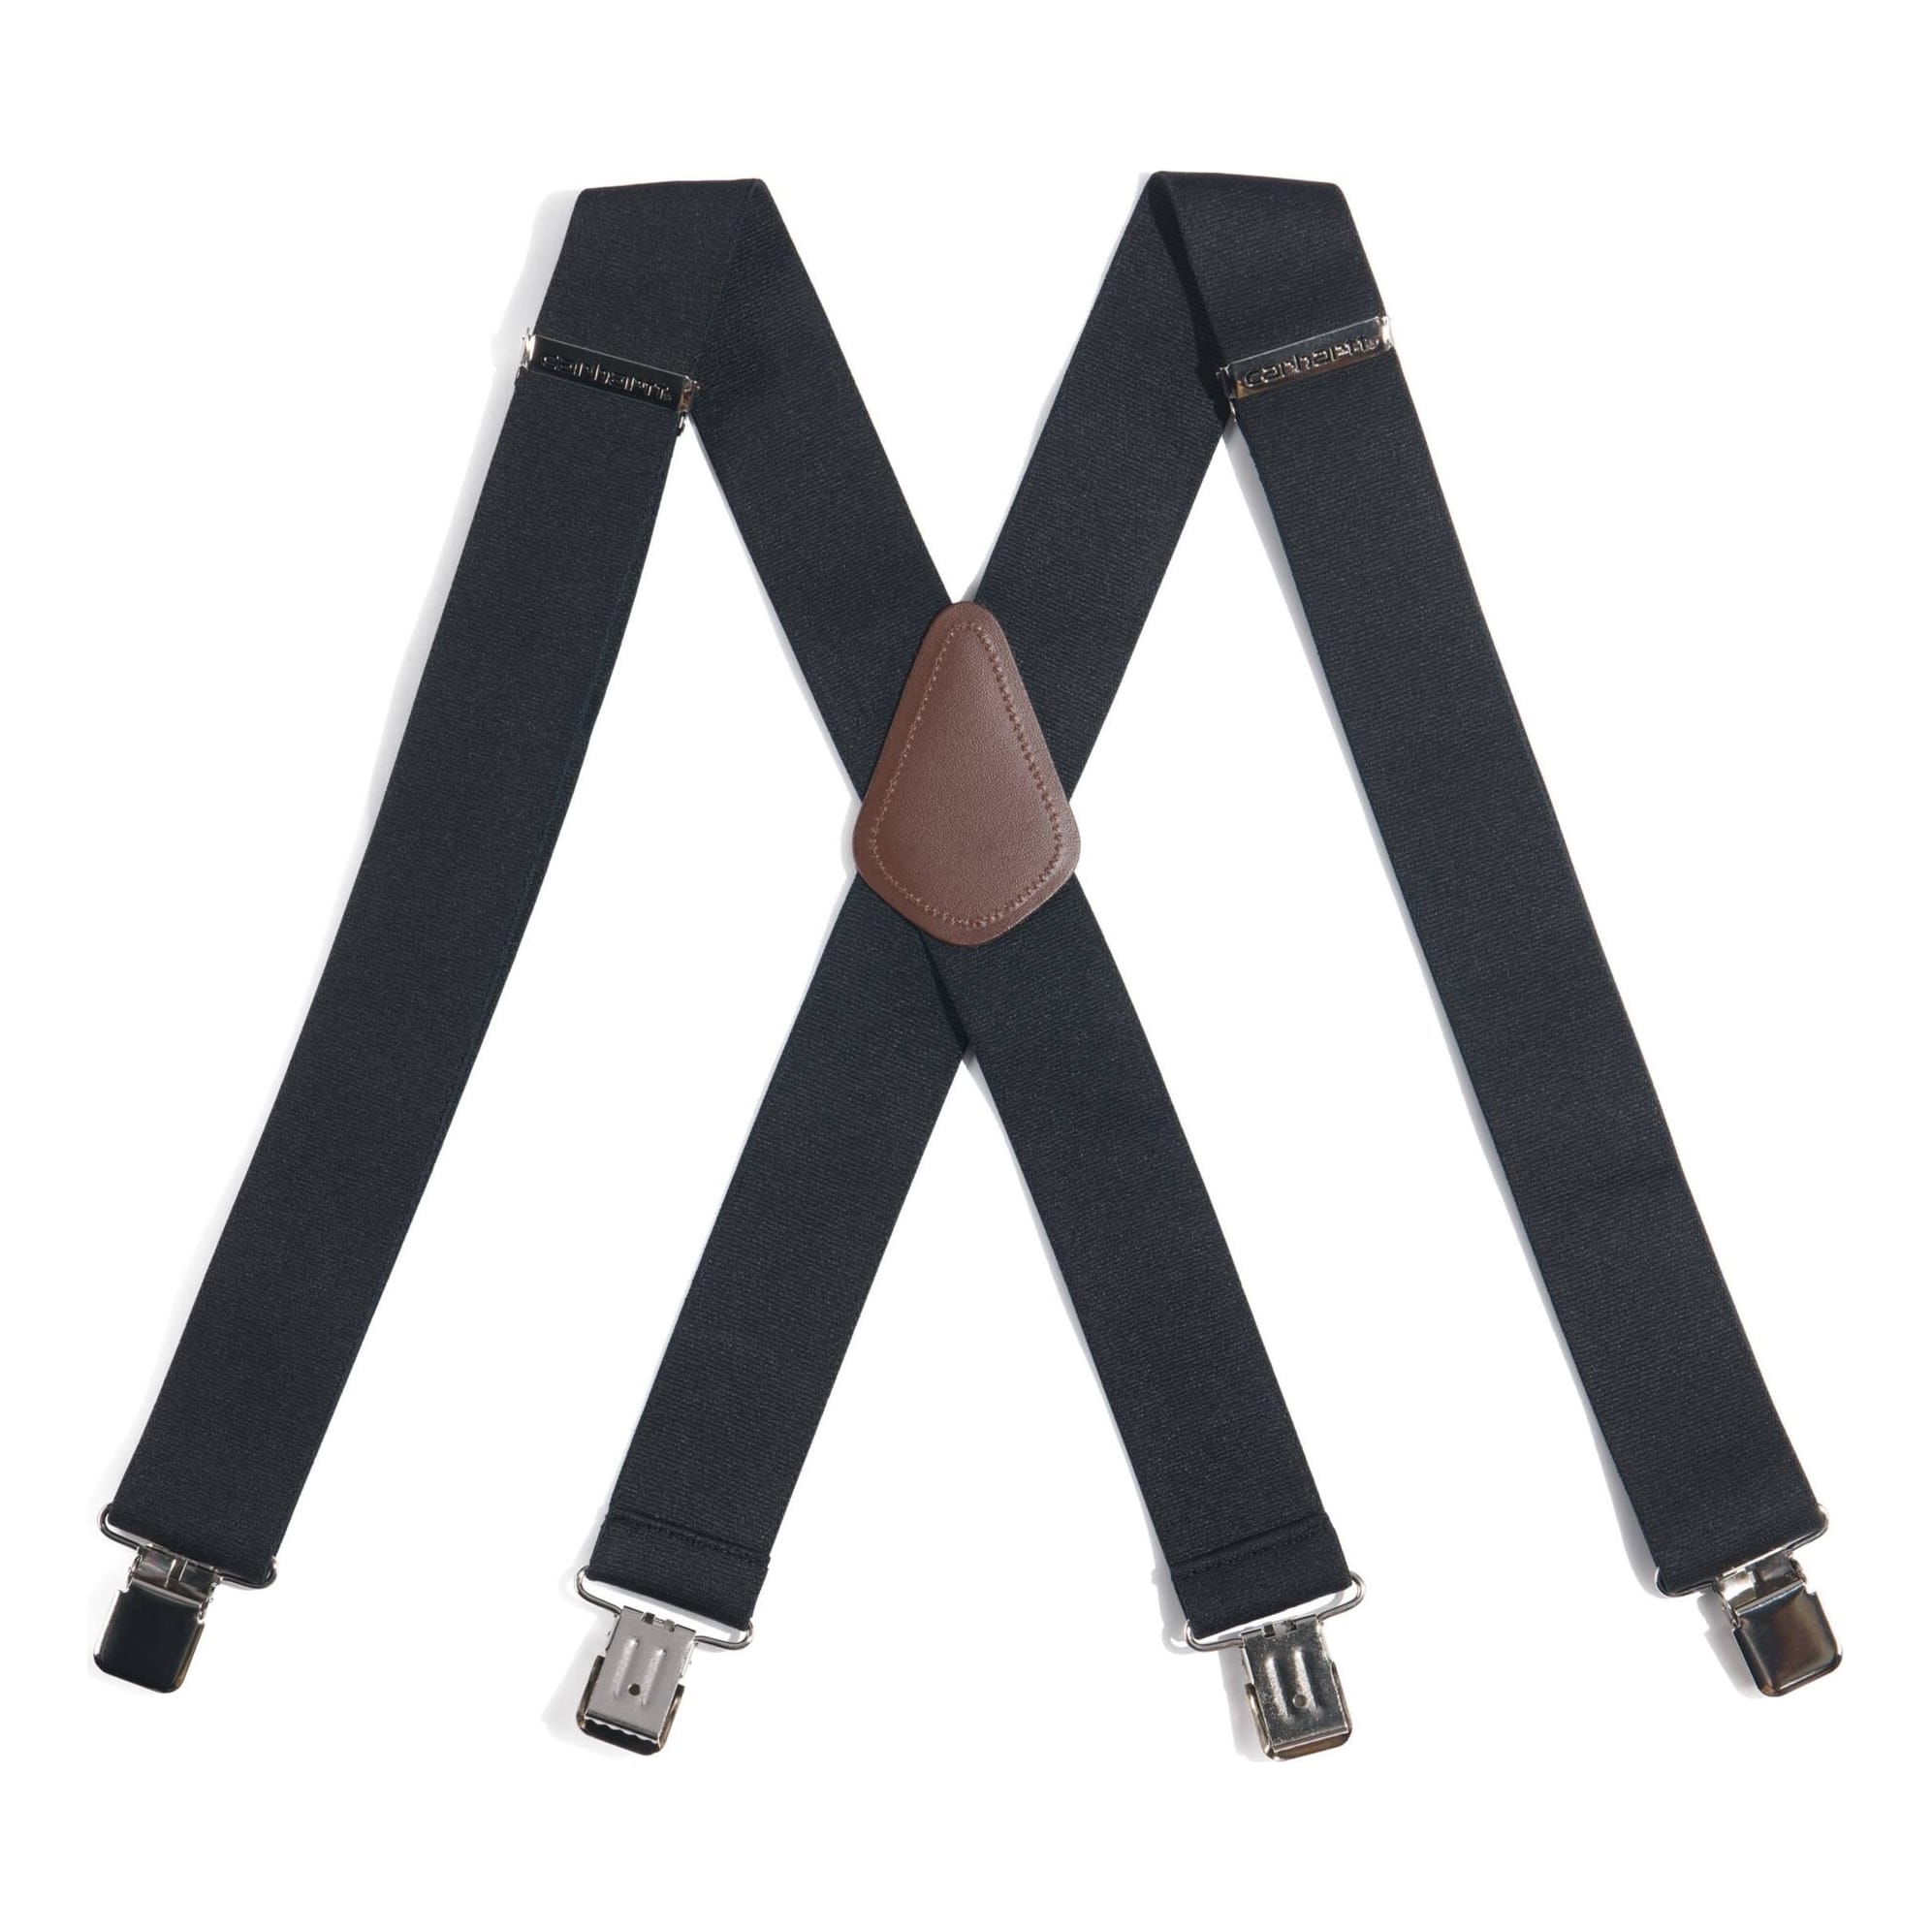  Camo Suspenders For Men Heavy Duty Clips Hunting 2 Inch  Adjustable Brace